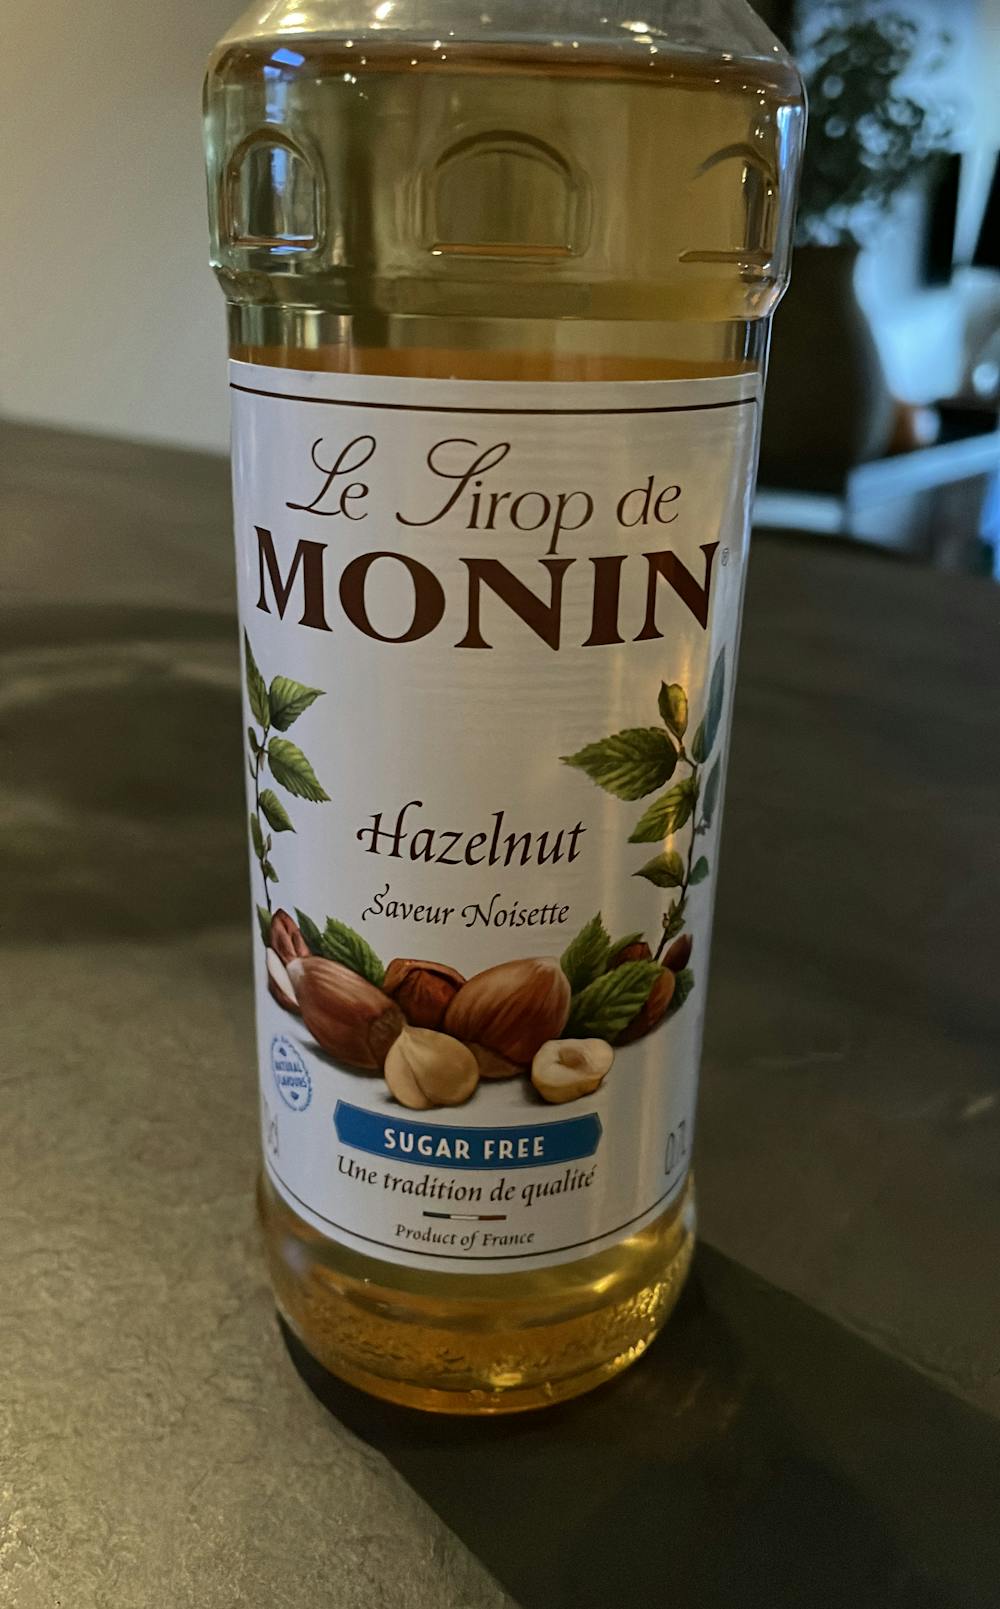 Noisette - Le sirop de Monin Monin